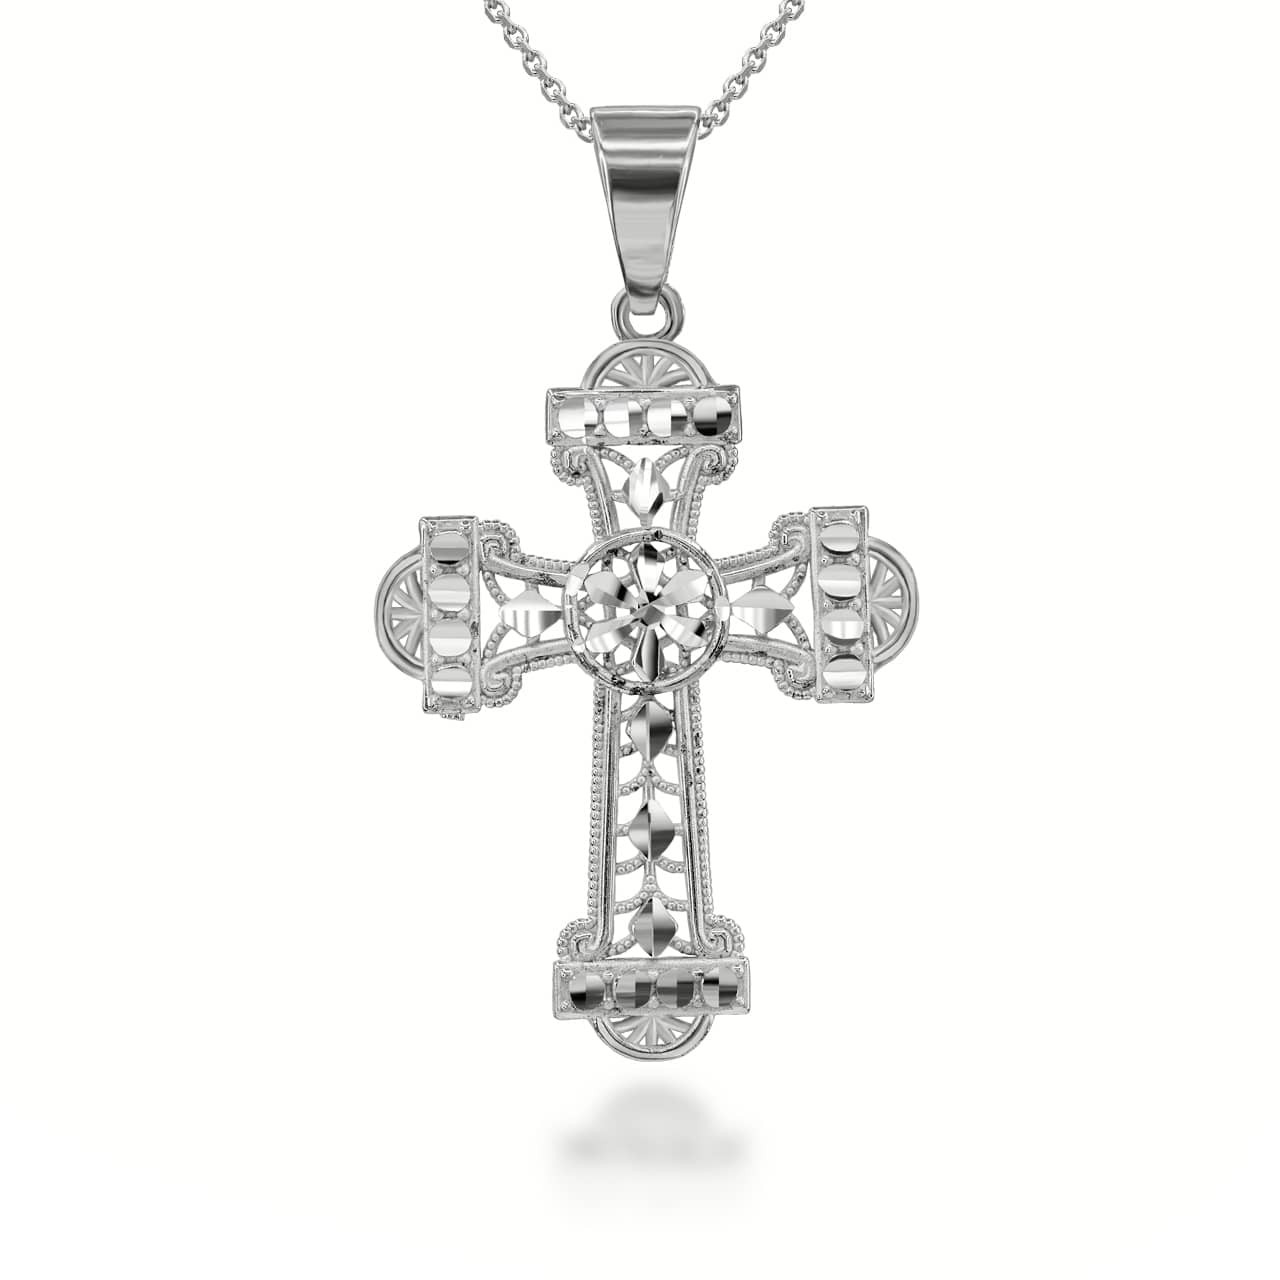 1928 Jewelry Black Bead Ornate Cross Pendant Necklace 30